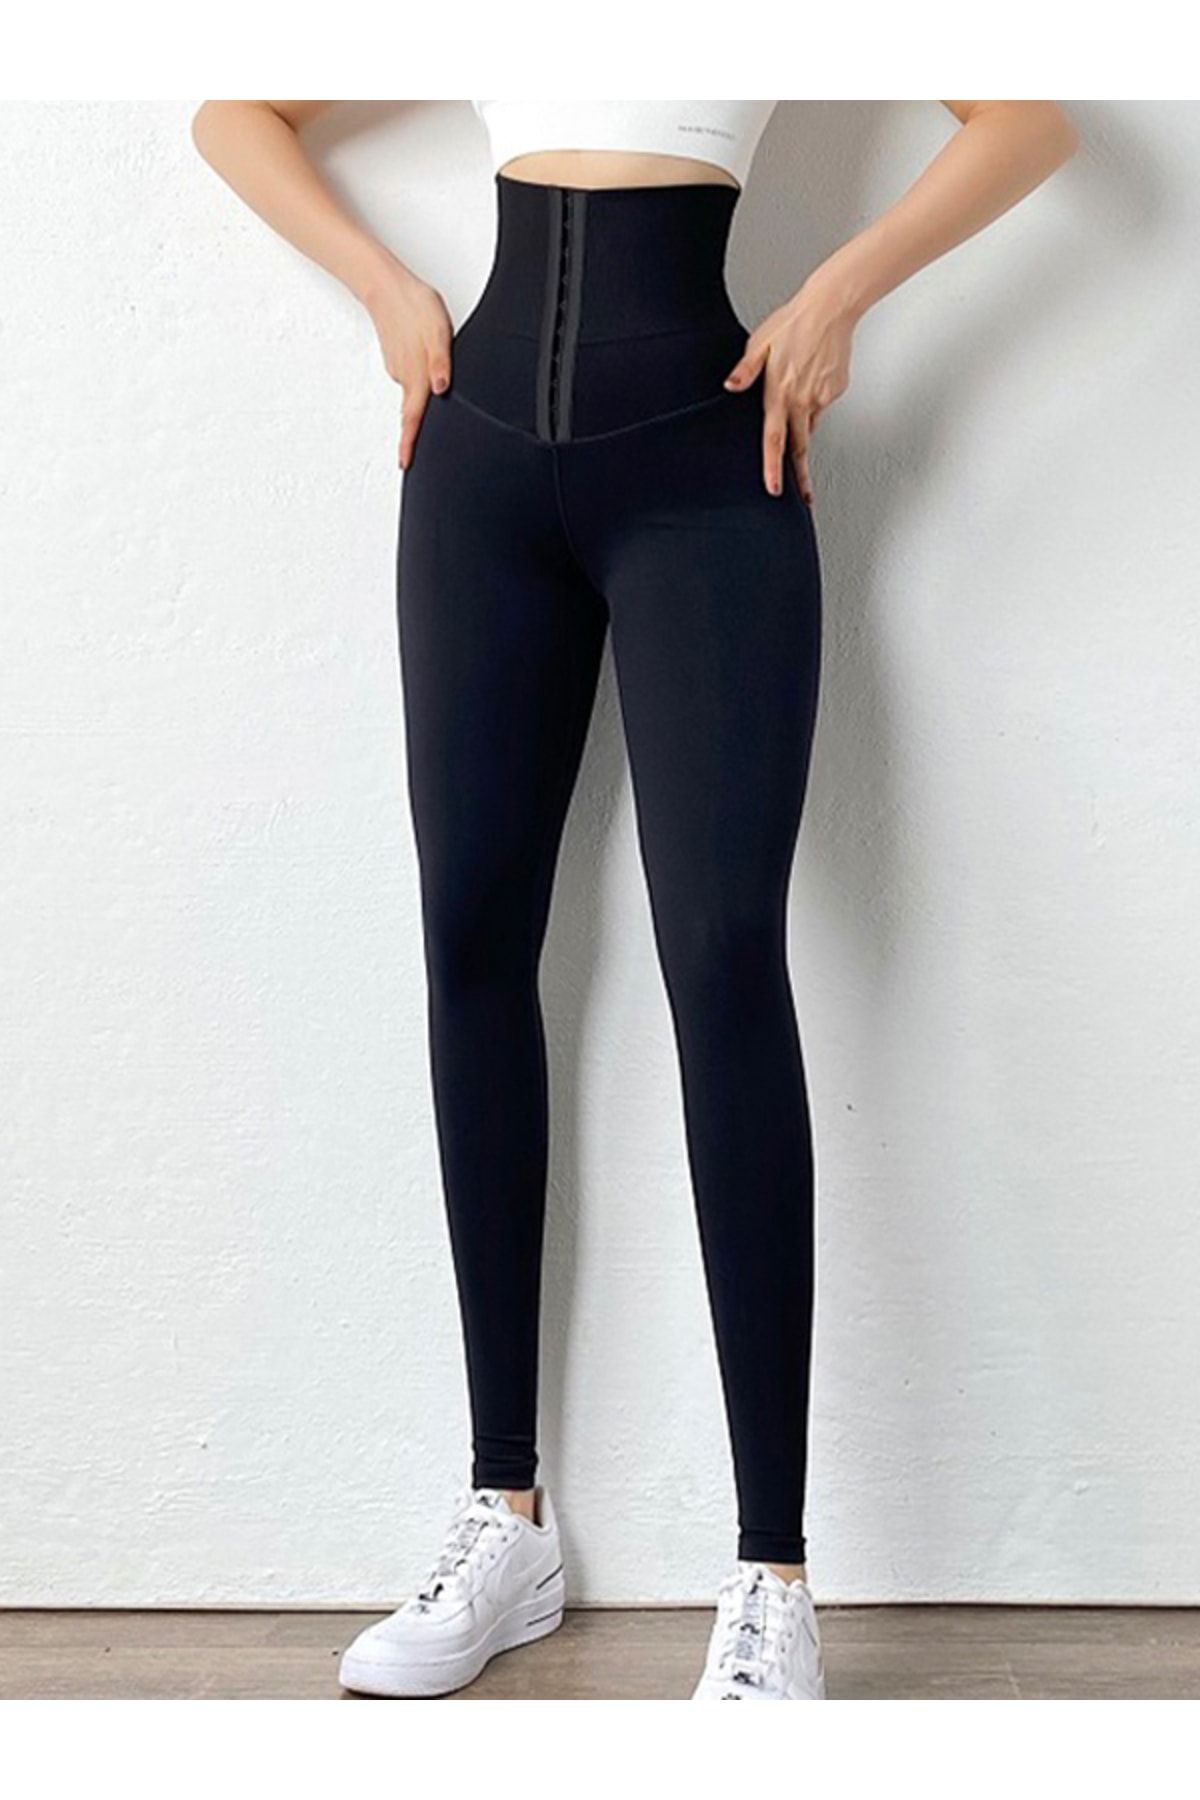 Super High Waist Corset Leggings for Women with Adjustable Body Shaping  Waist Cincher Corset Yoga Pants 